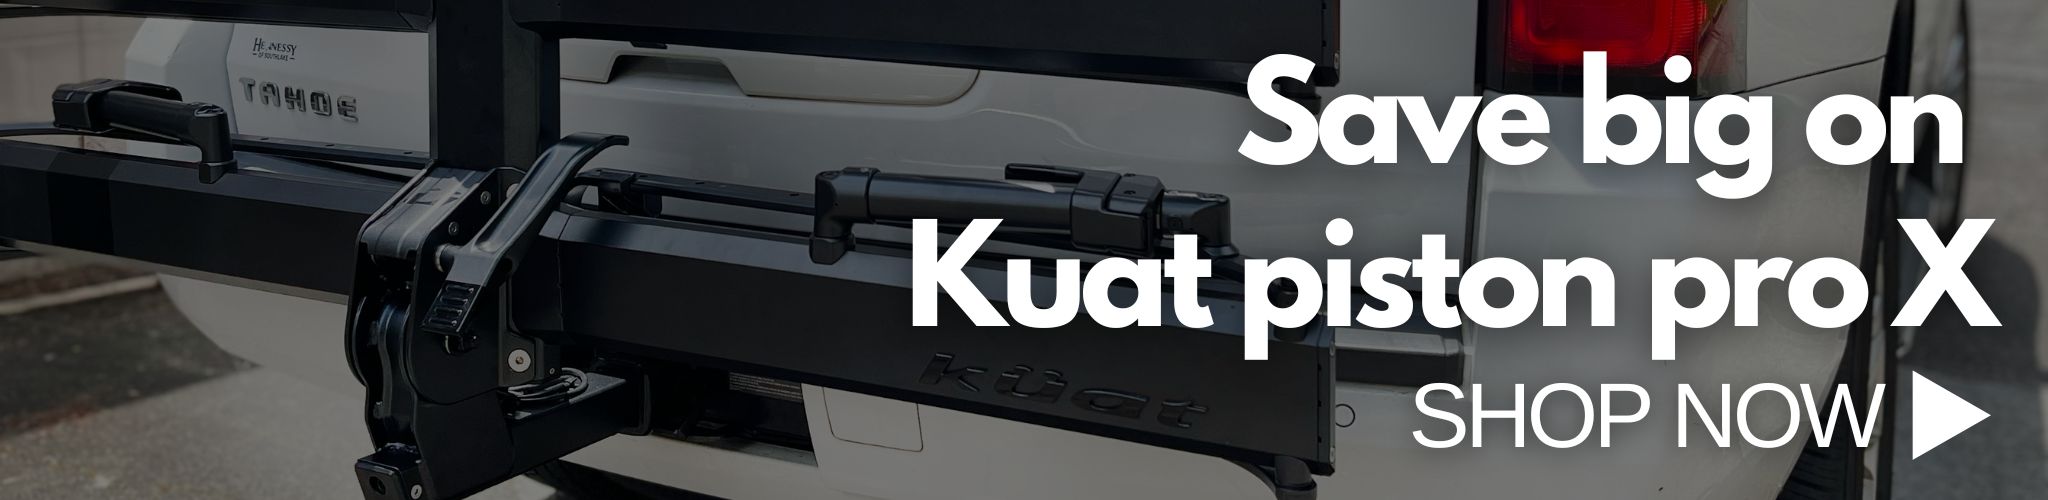 Save Big on Kuat Piston Pro X | Shop Now